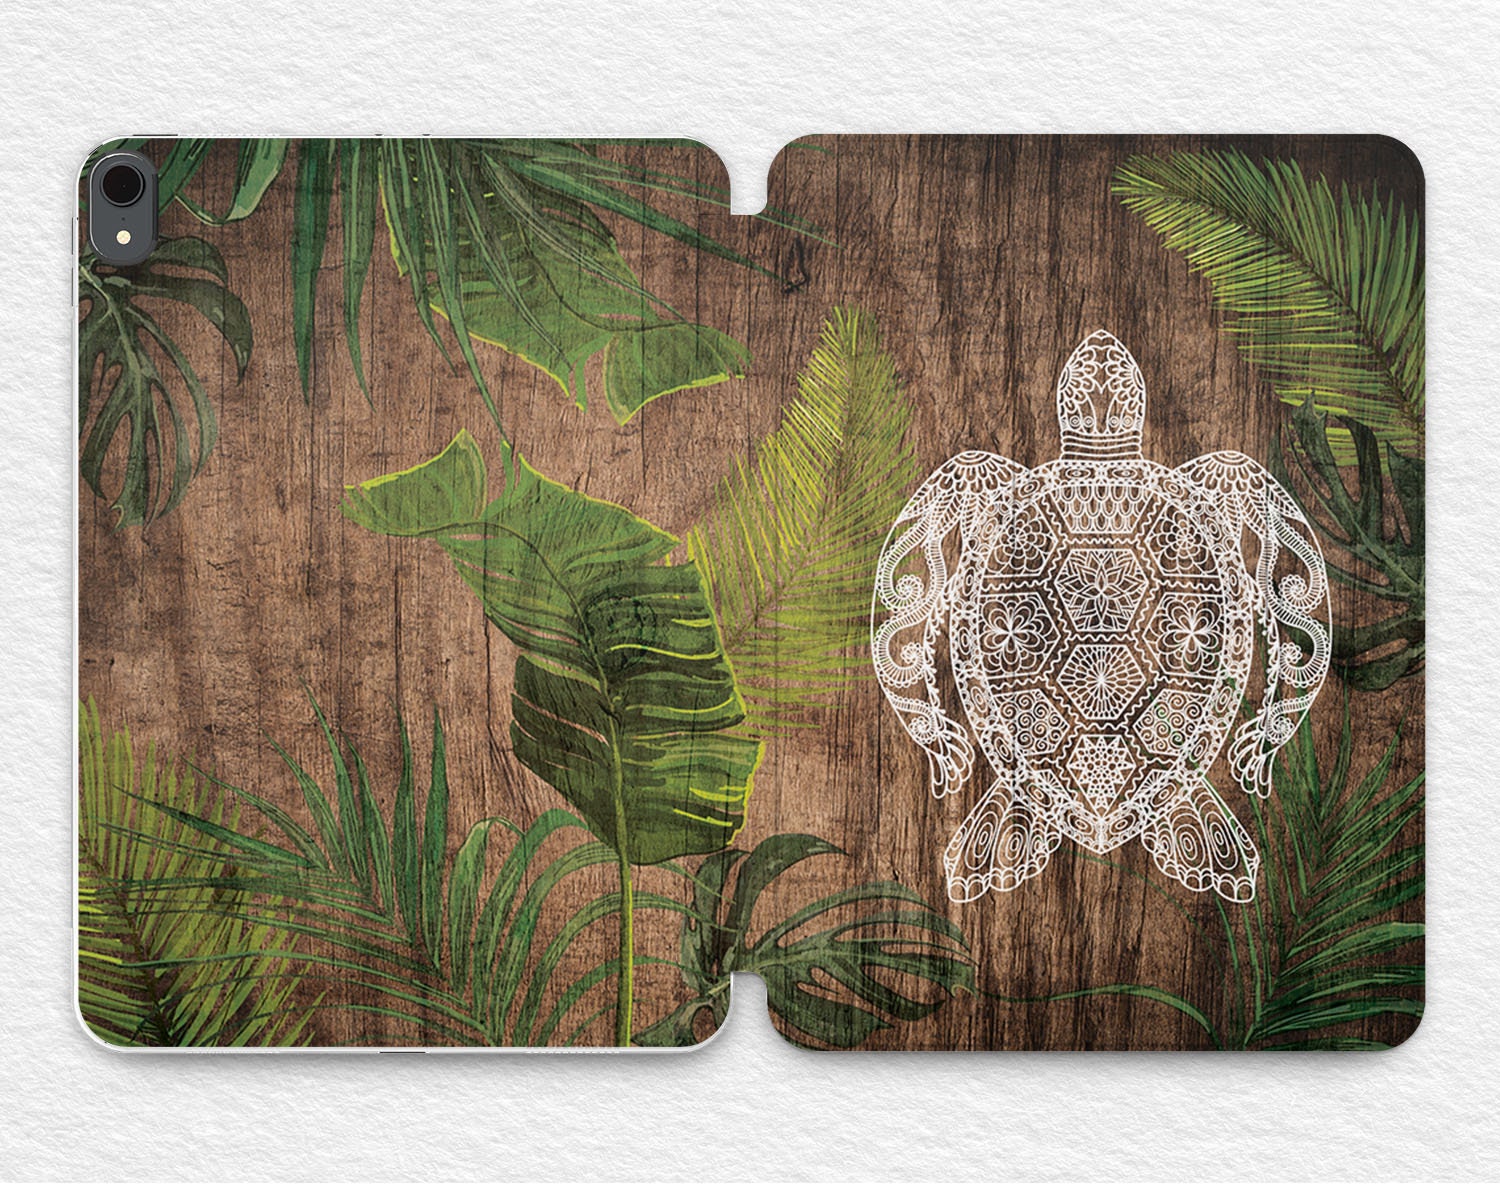 Tutute, the turtle iPad Case & Skin by AlaakUnivers